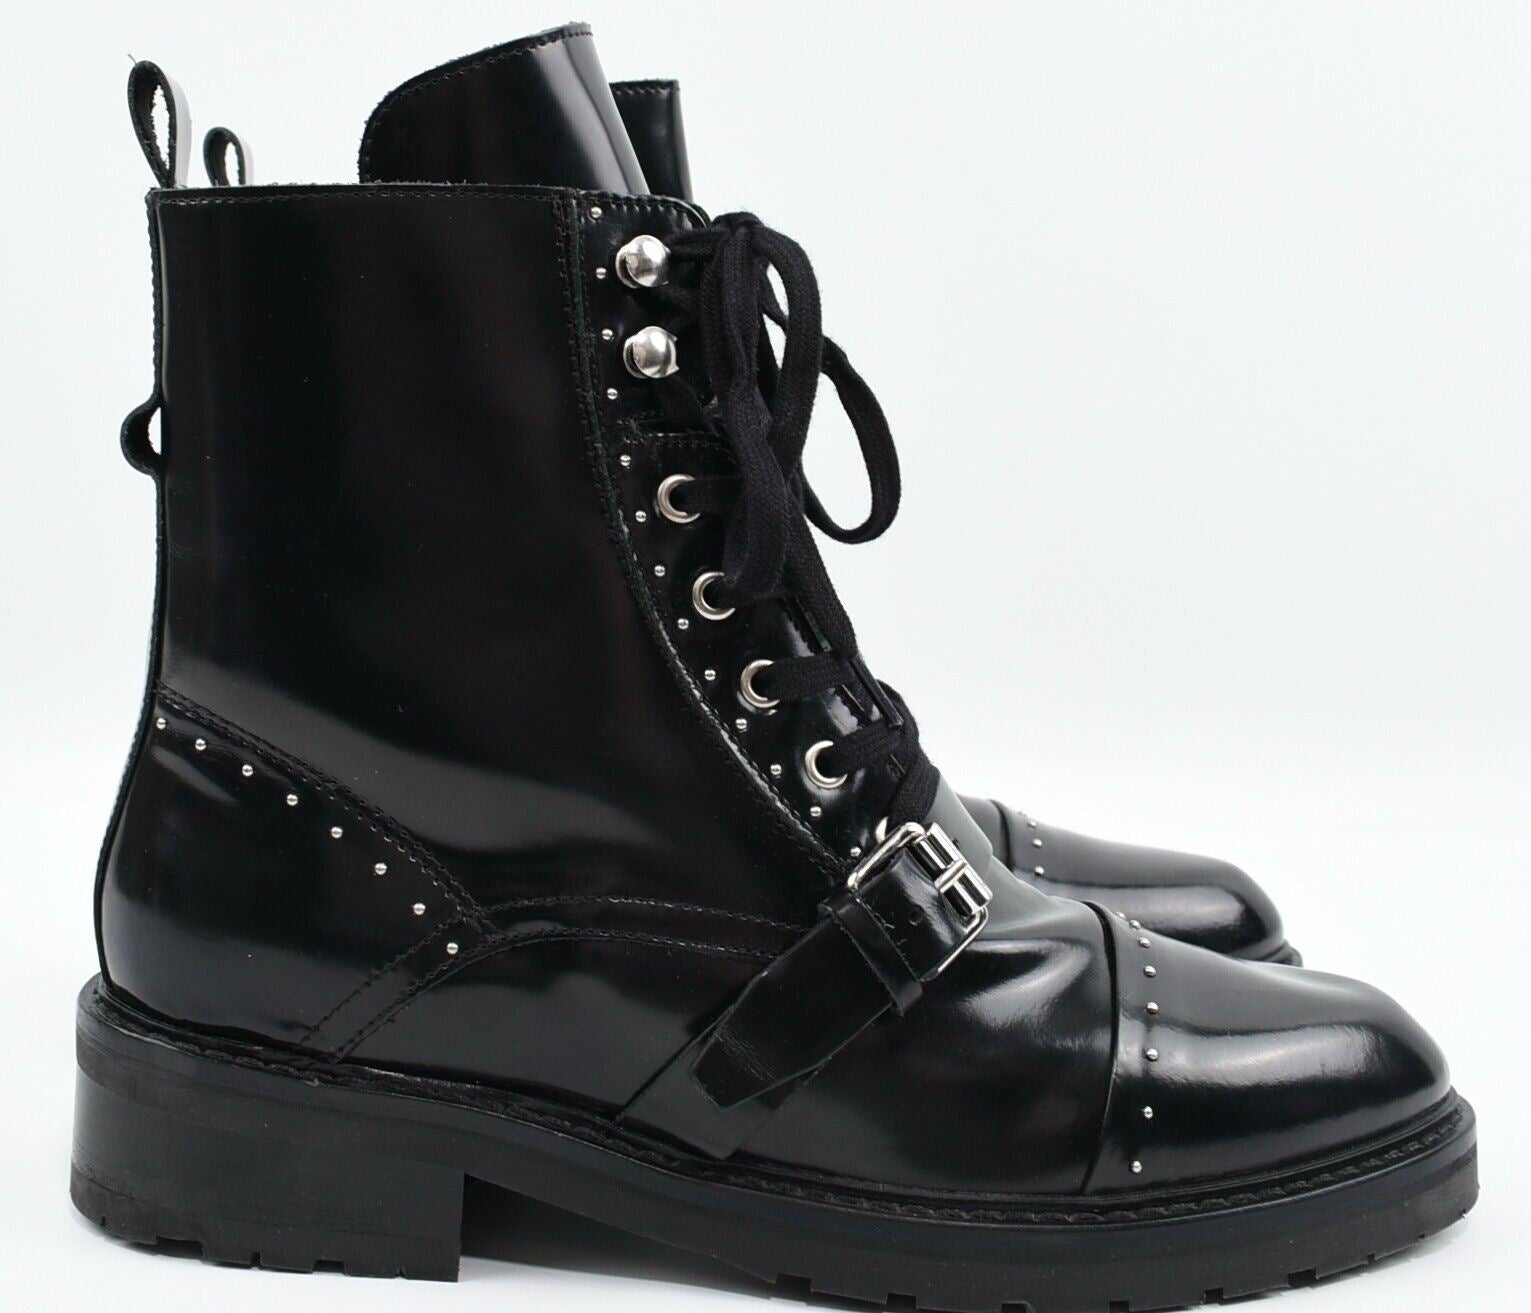 ALLSAINTS Women's DAYNA Genuine Leather Boots, Black, size UK 7 / EU 40